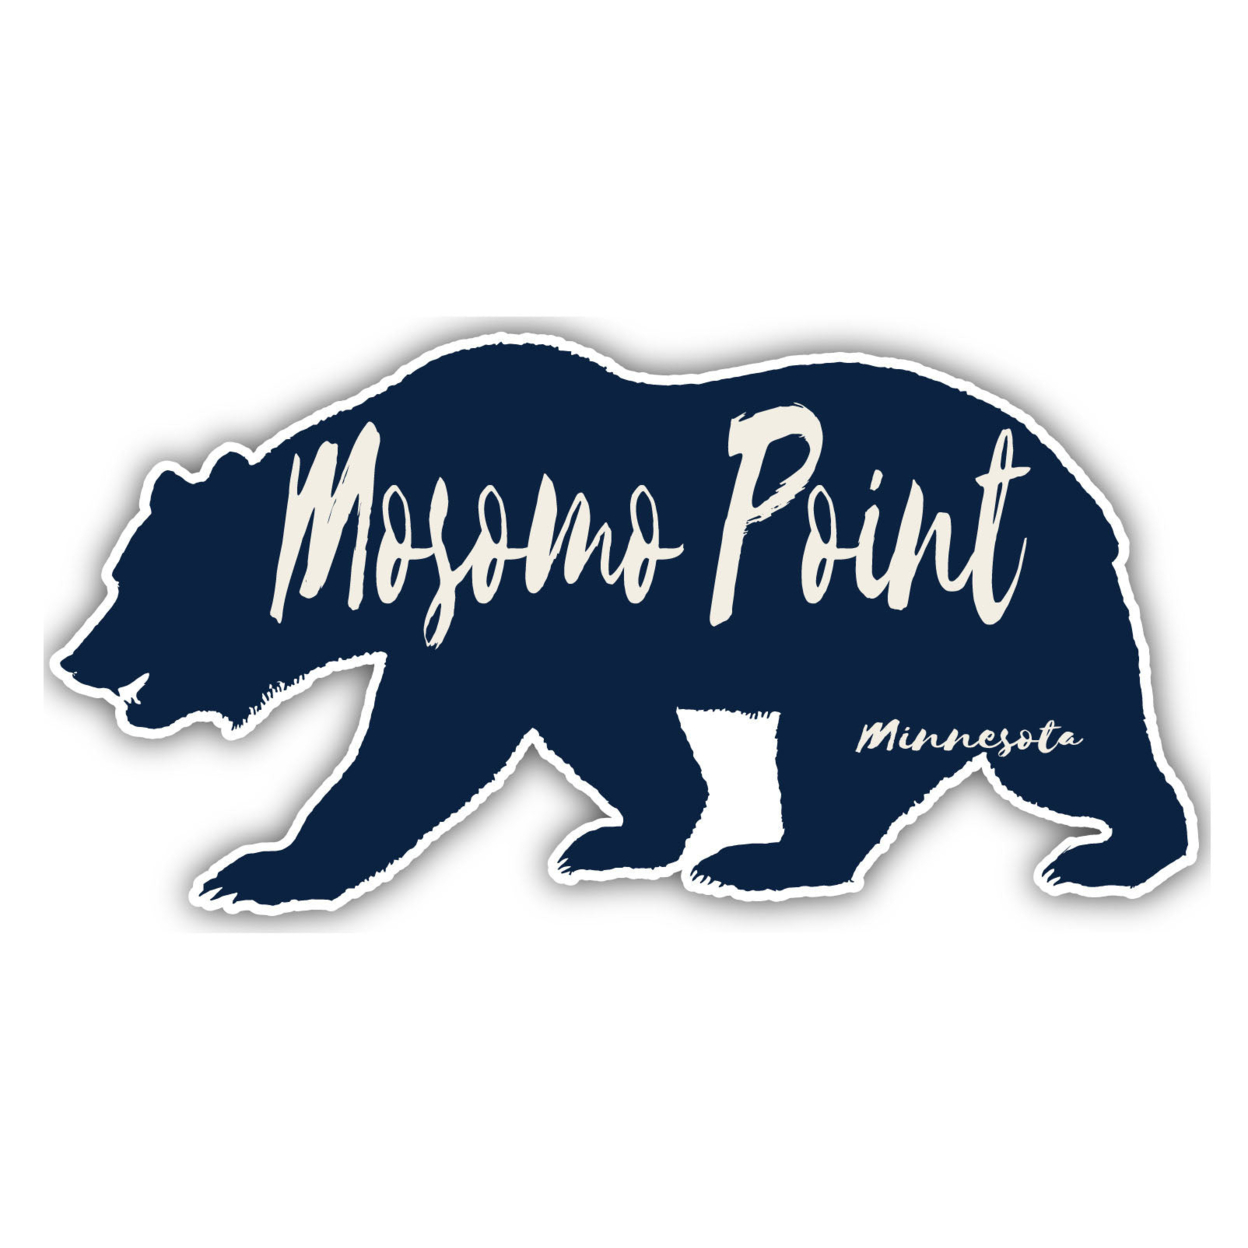 Mosomo Point Minnesota Souvenir Decorative Stickers (Choose Theme And Size) - Single Unit, 2-Inch, Bear